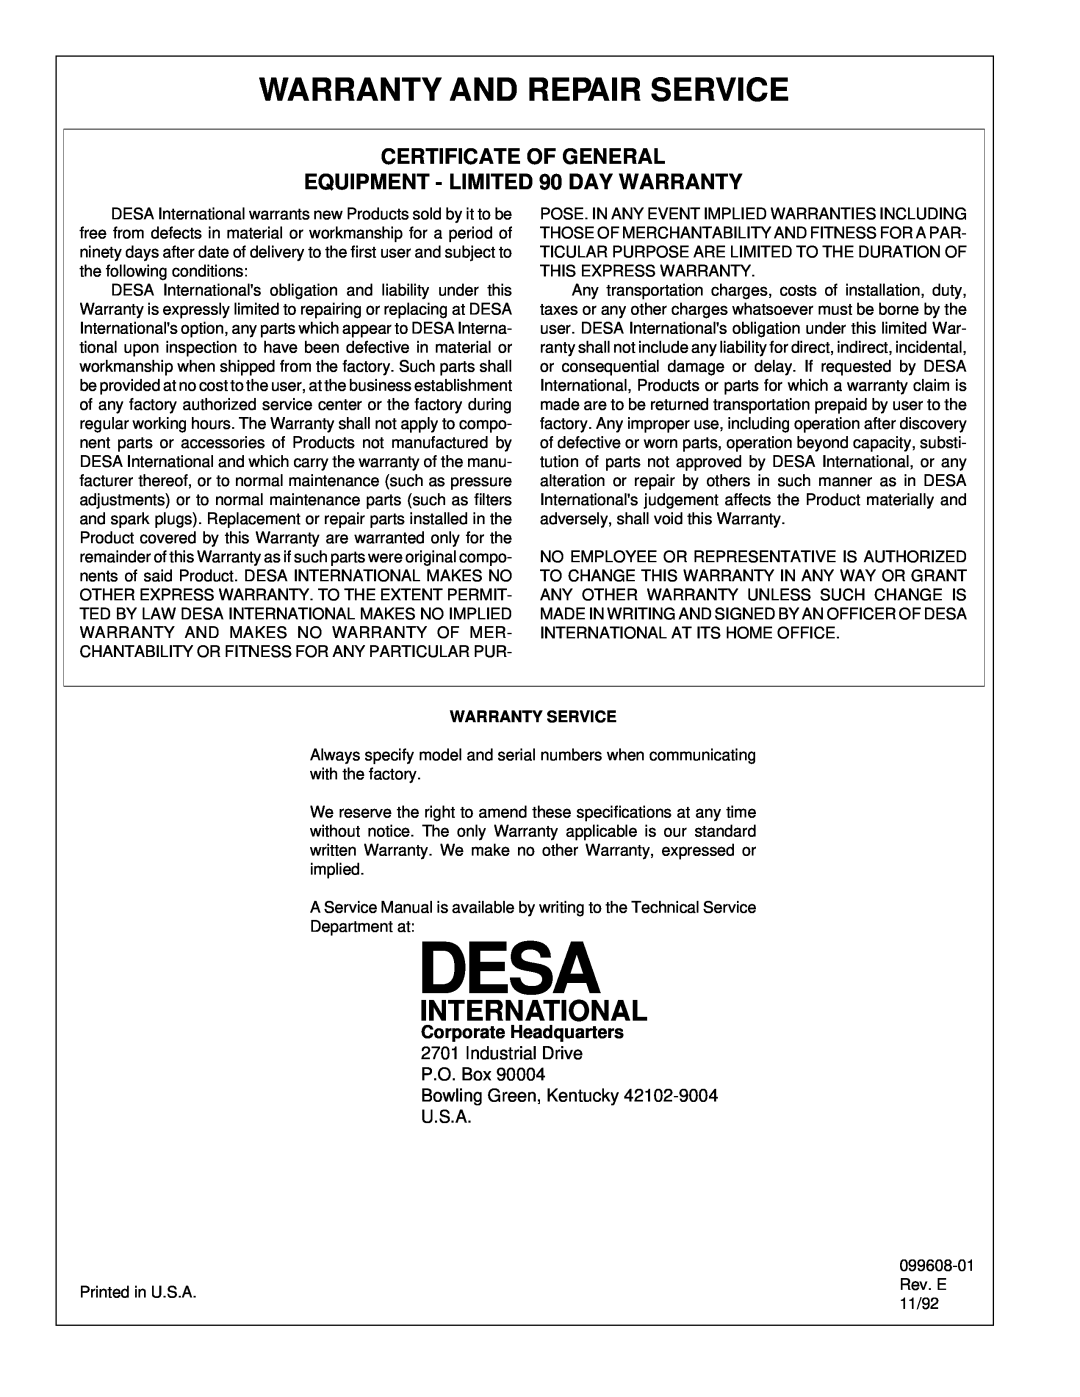 Desa RV125EDI Warranty And Repair Service, International, Certificate Of General, EQUIPMENT - LIMITED 90 DAY WARRANTY 